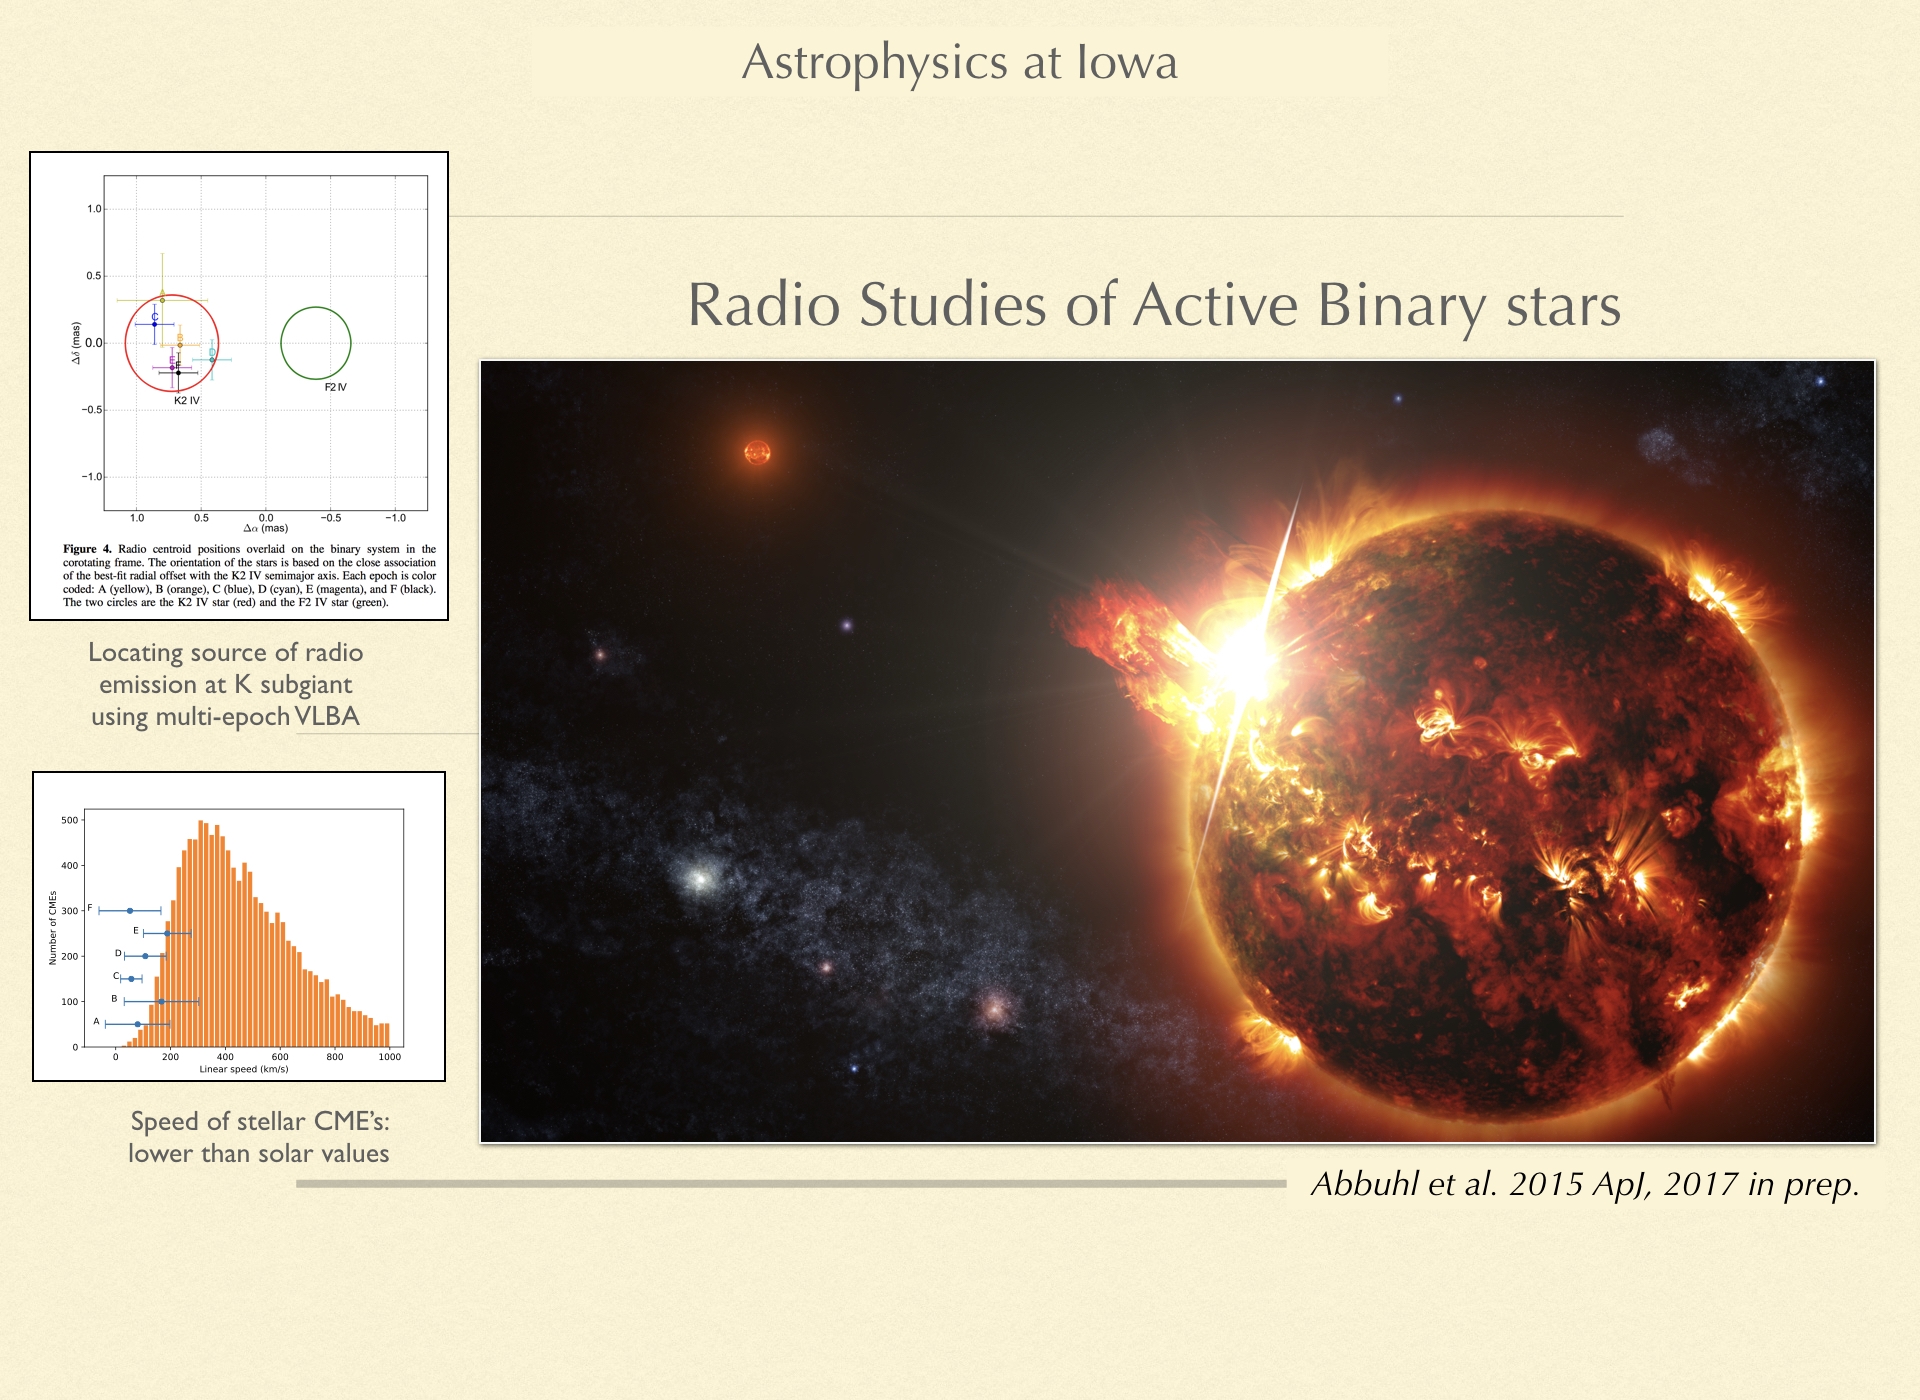 Radio studies of close active binaries